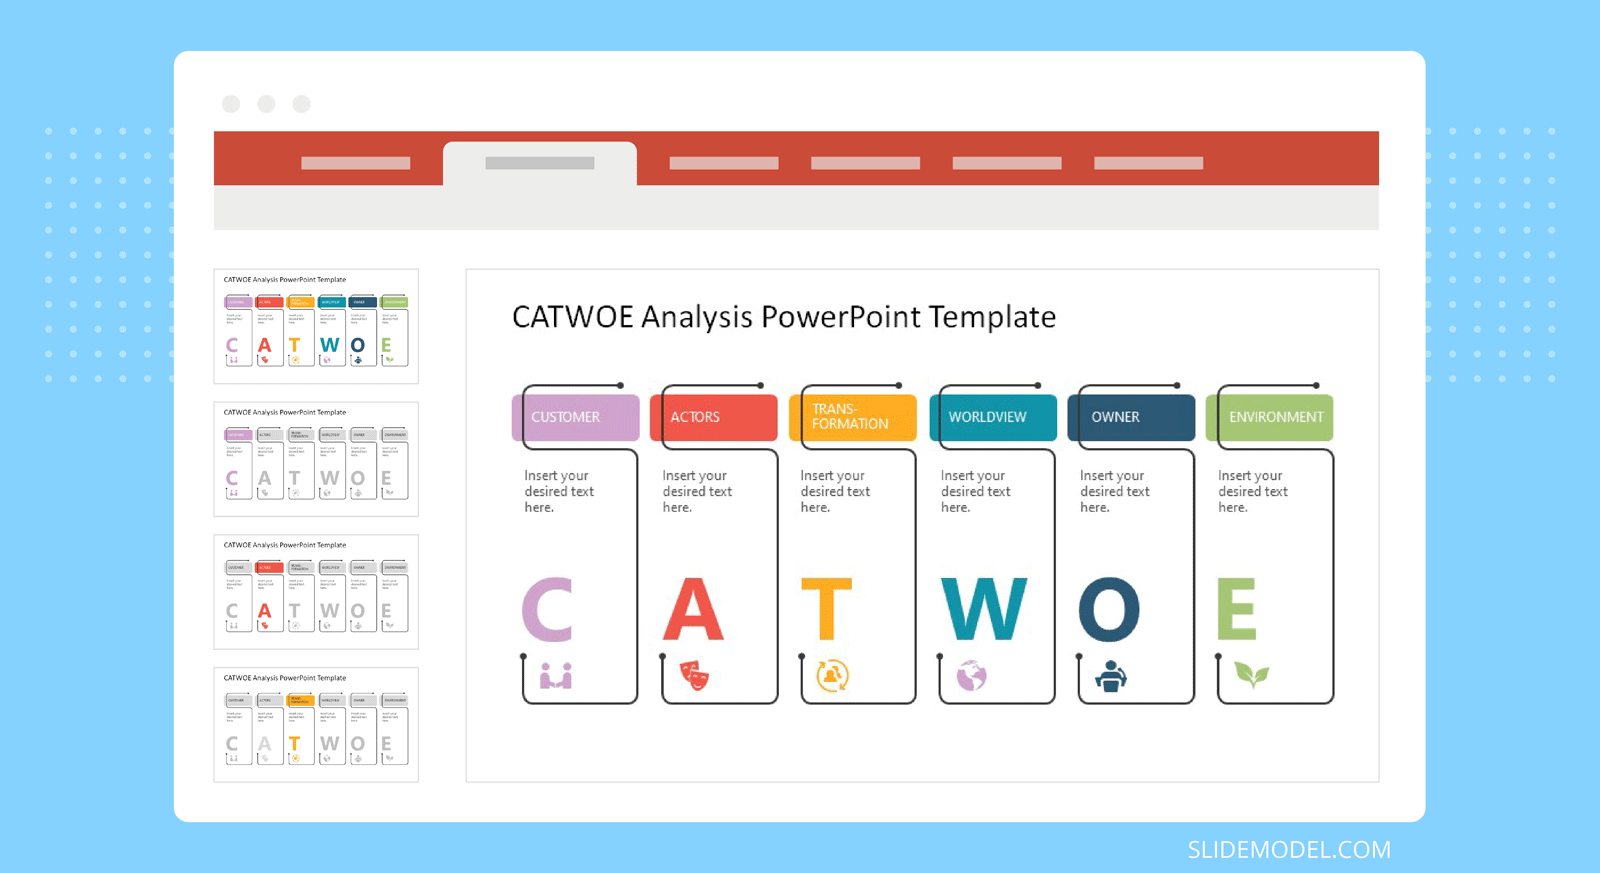 CATWOE Analysis Model Presentation Template by SlideModel.com